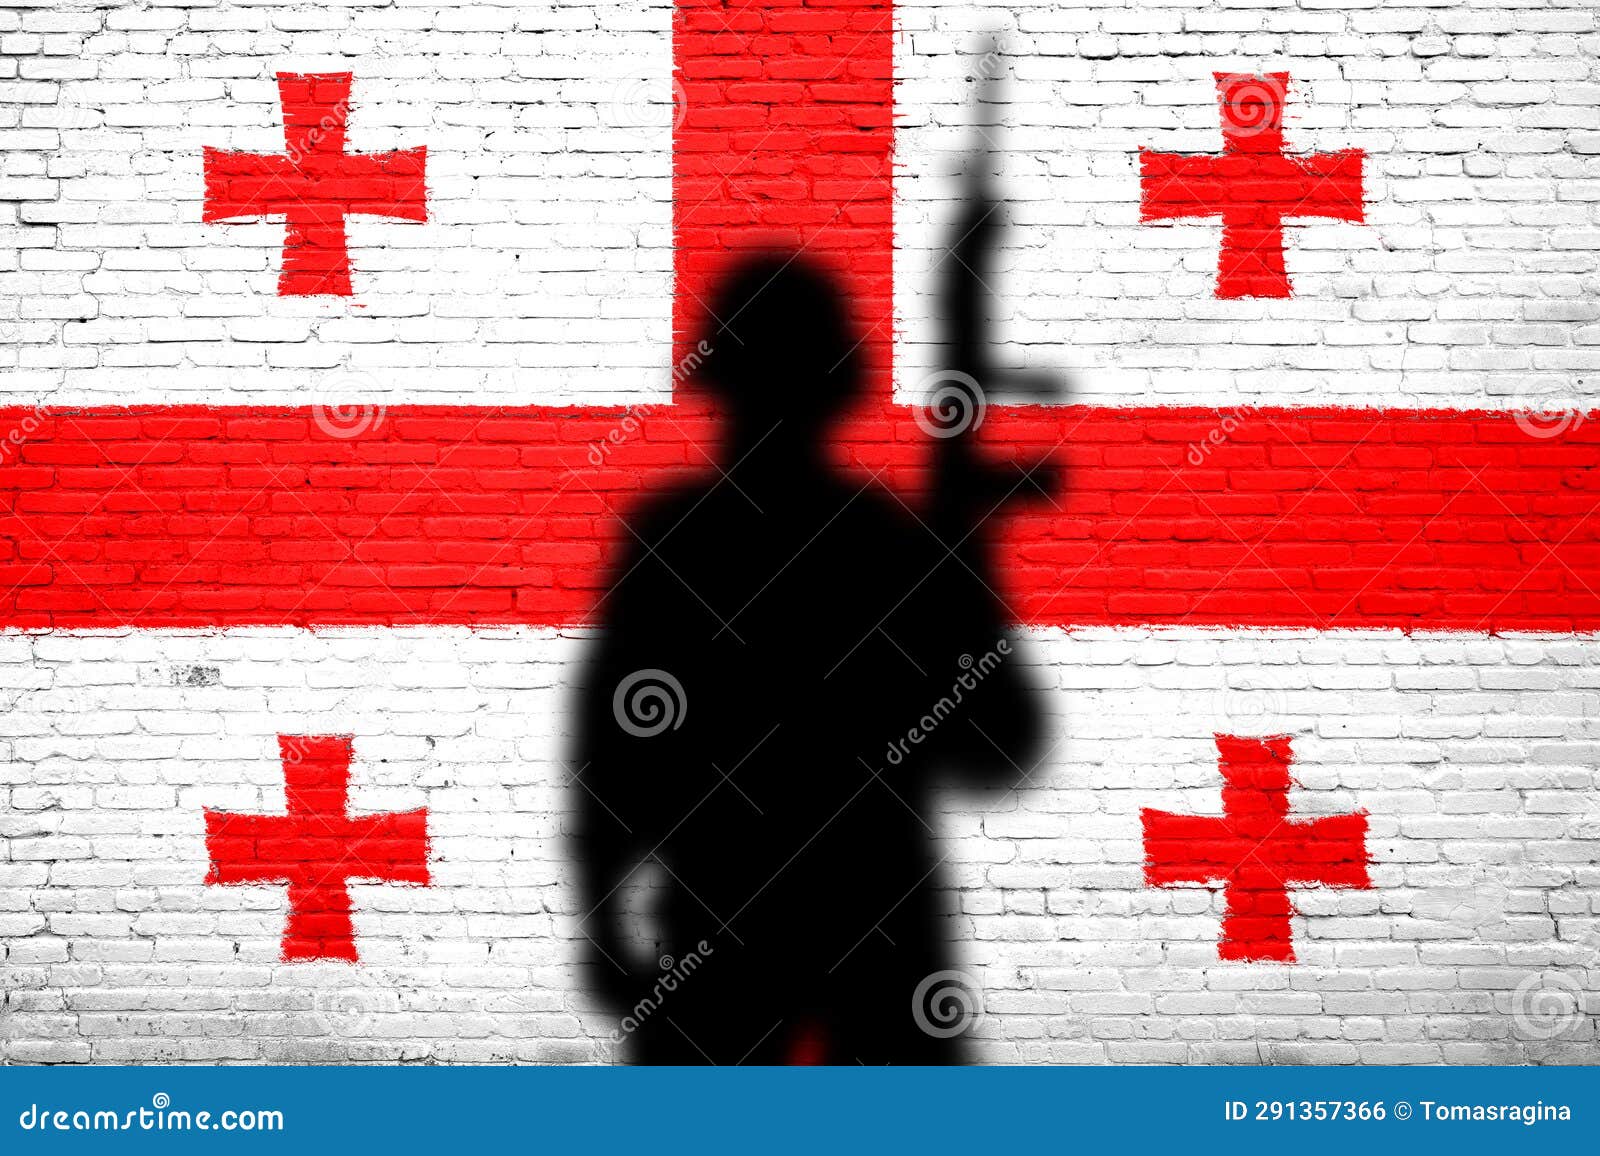 georgians flag on the brick wall